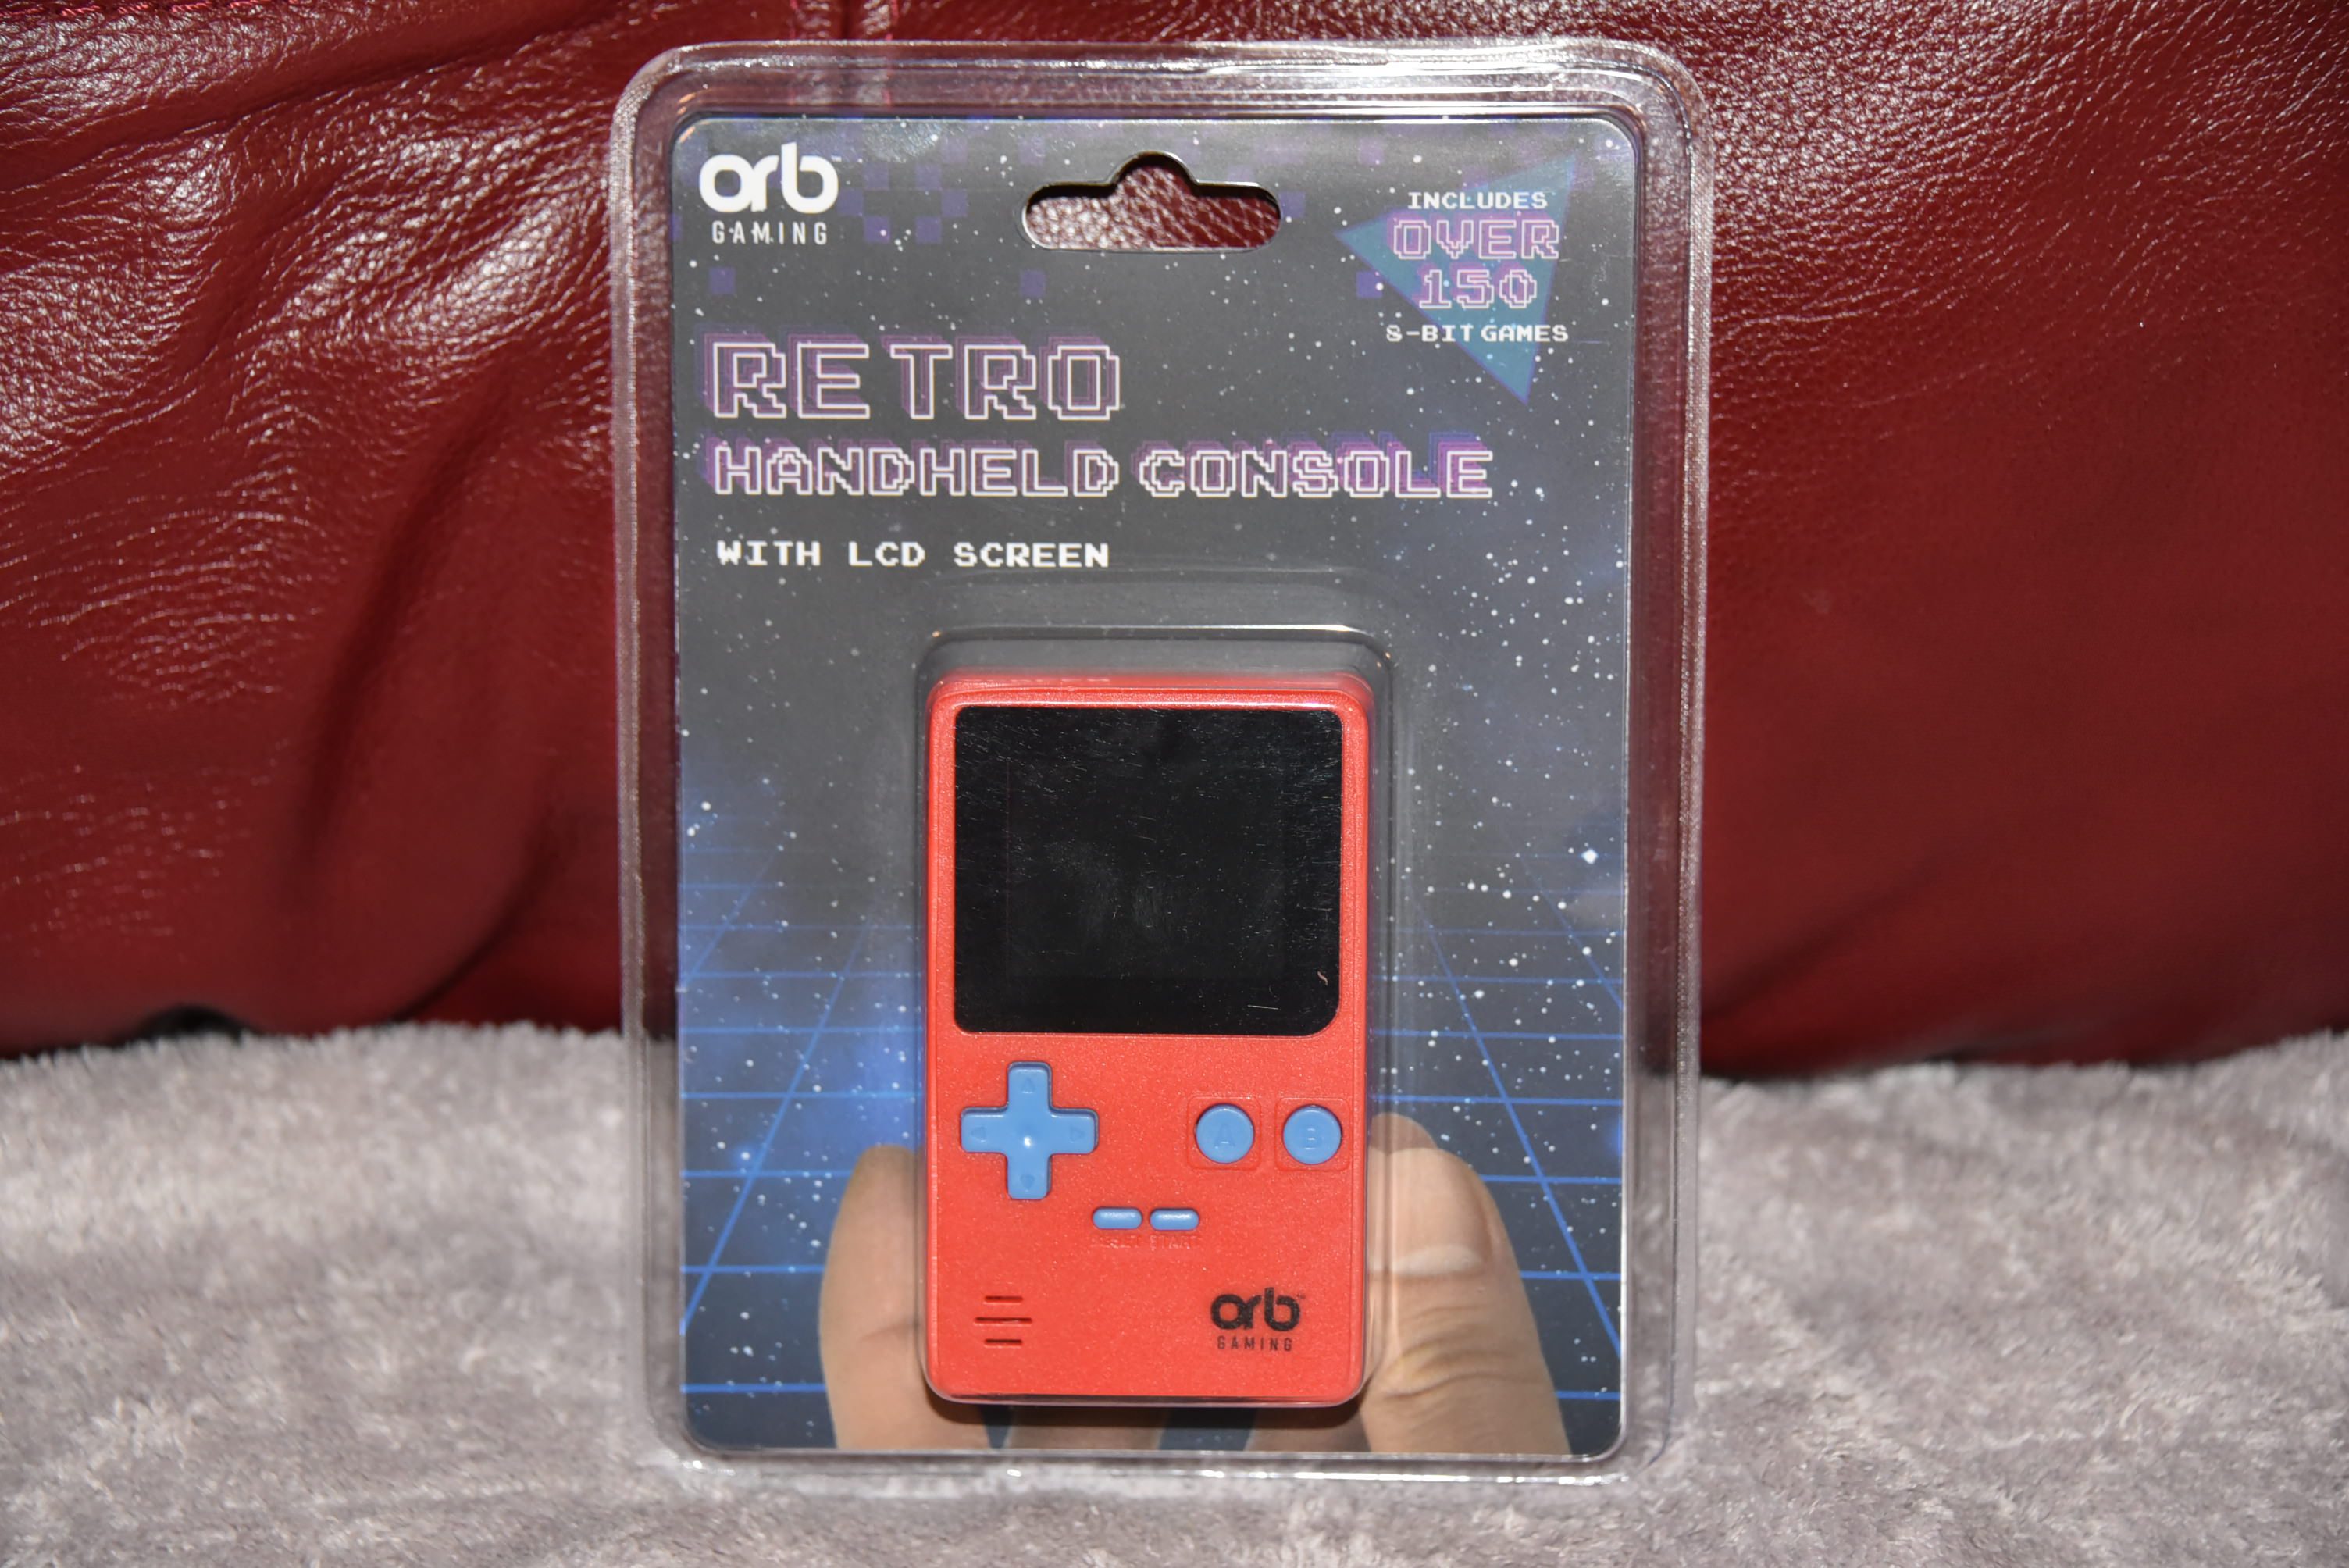 orb gaming retro handheld console